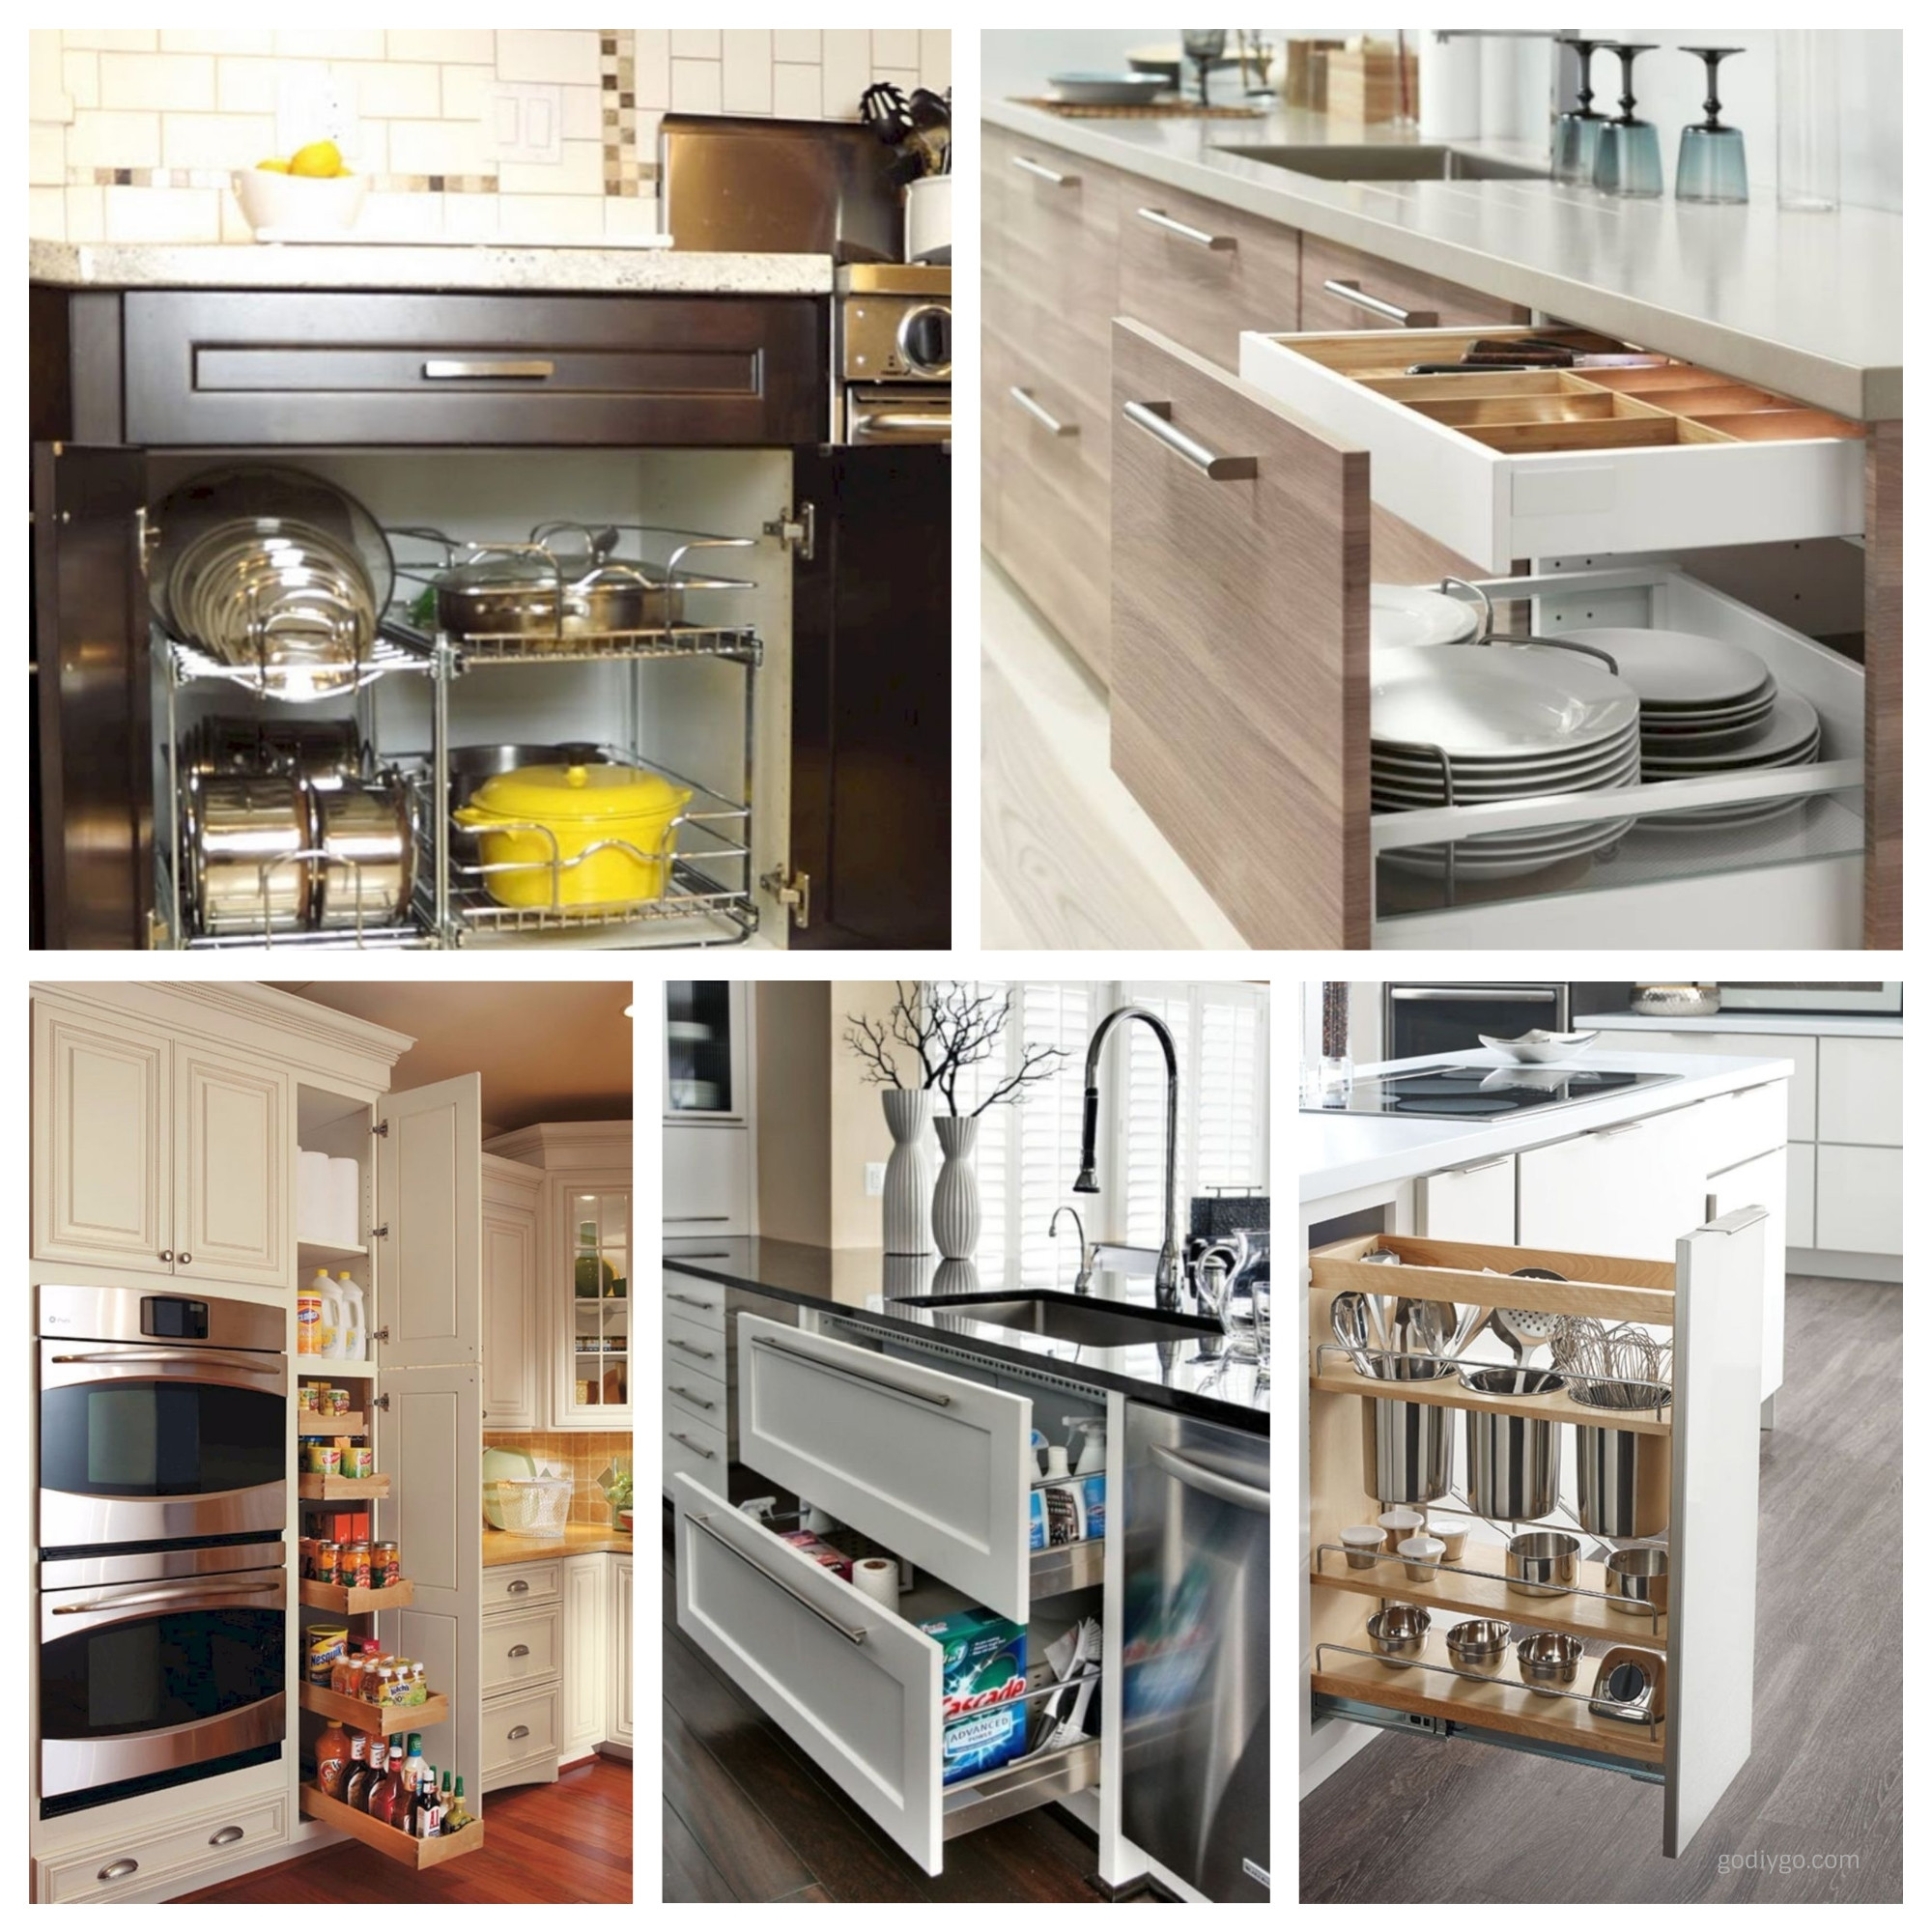 Organize Kitchen Cabinets
 44 Smart Kitchen Cabinet Organization Ideas GODIYGO